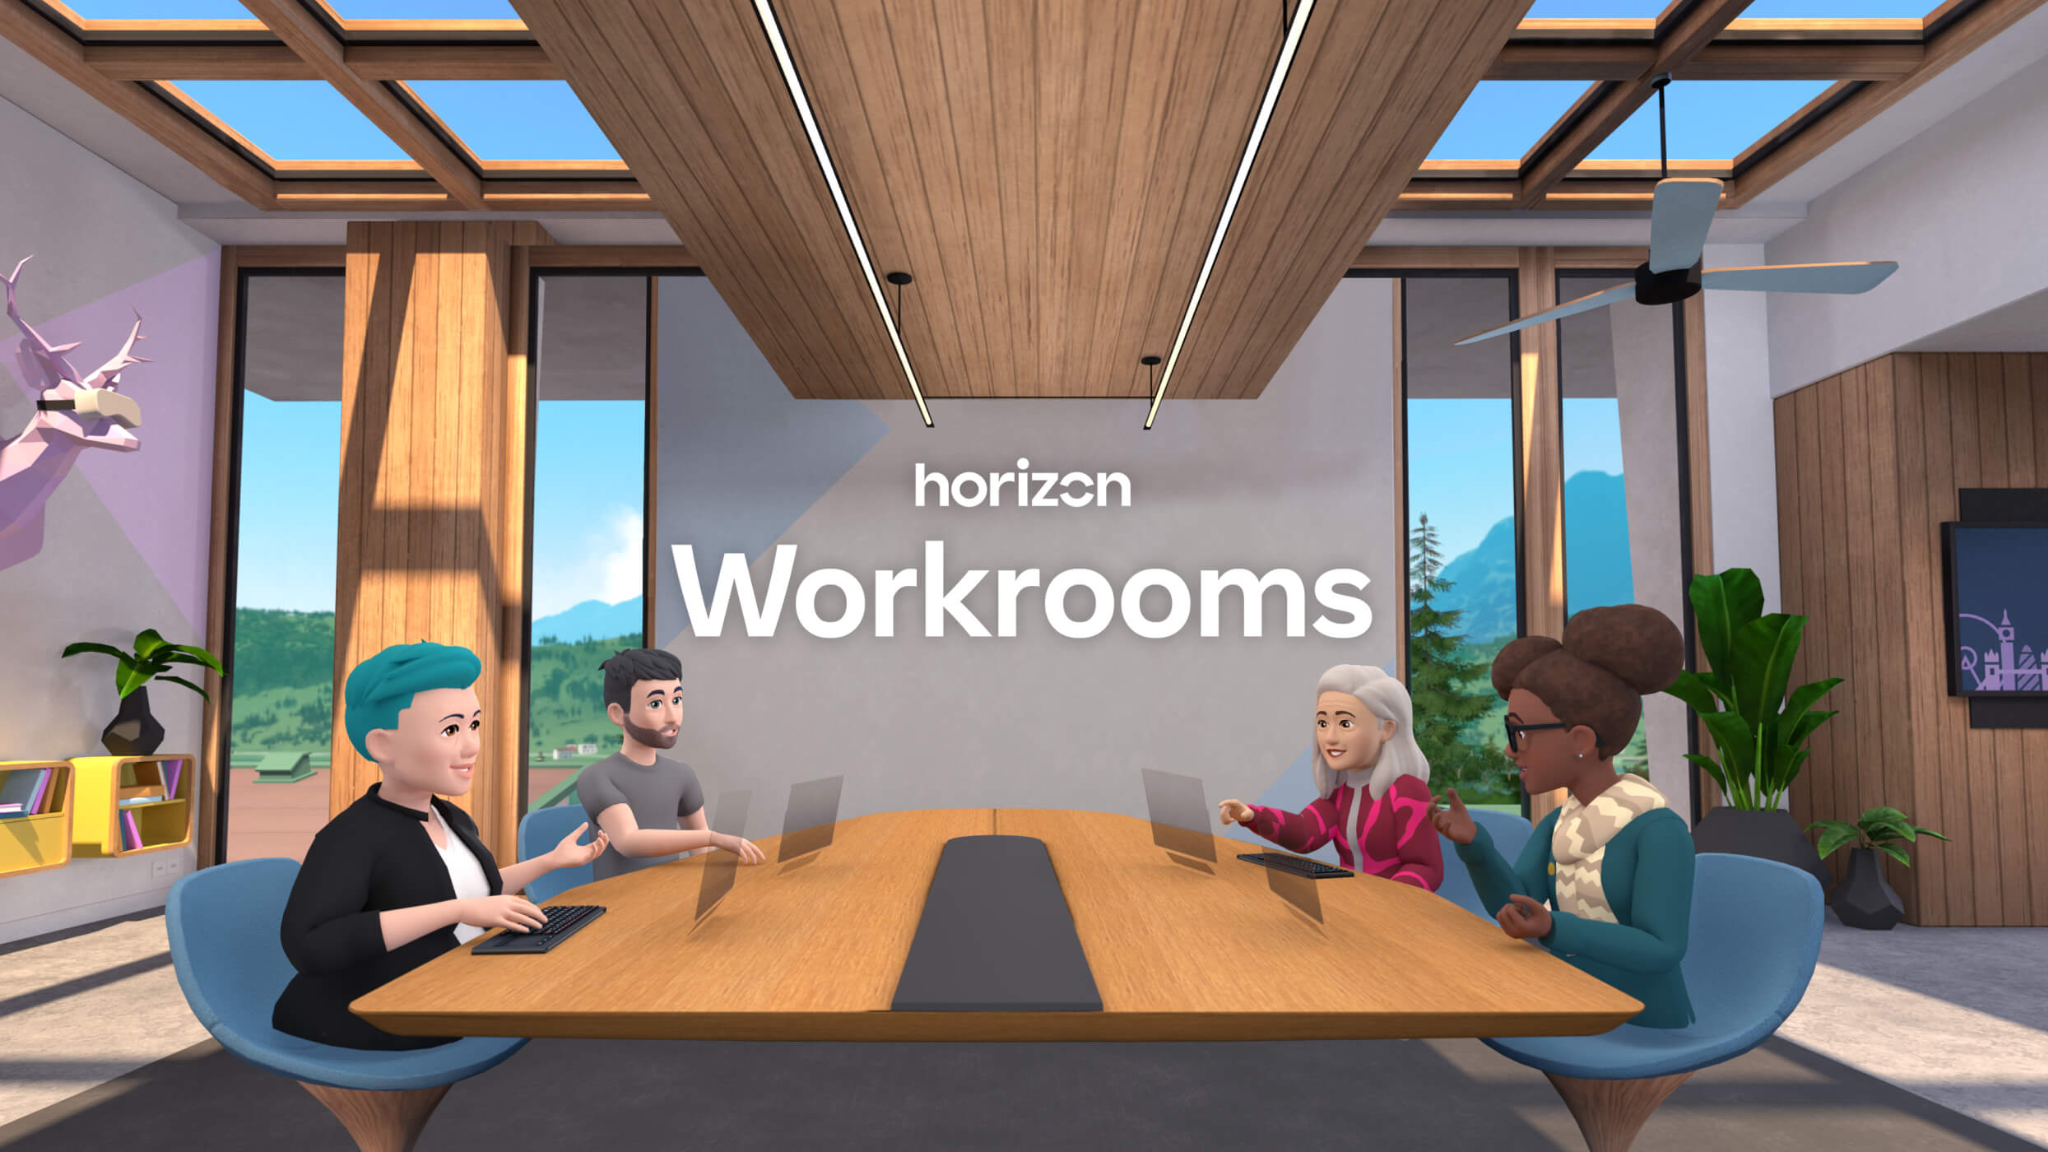 Horizon Workroom: Facebook’s vision for business